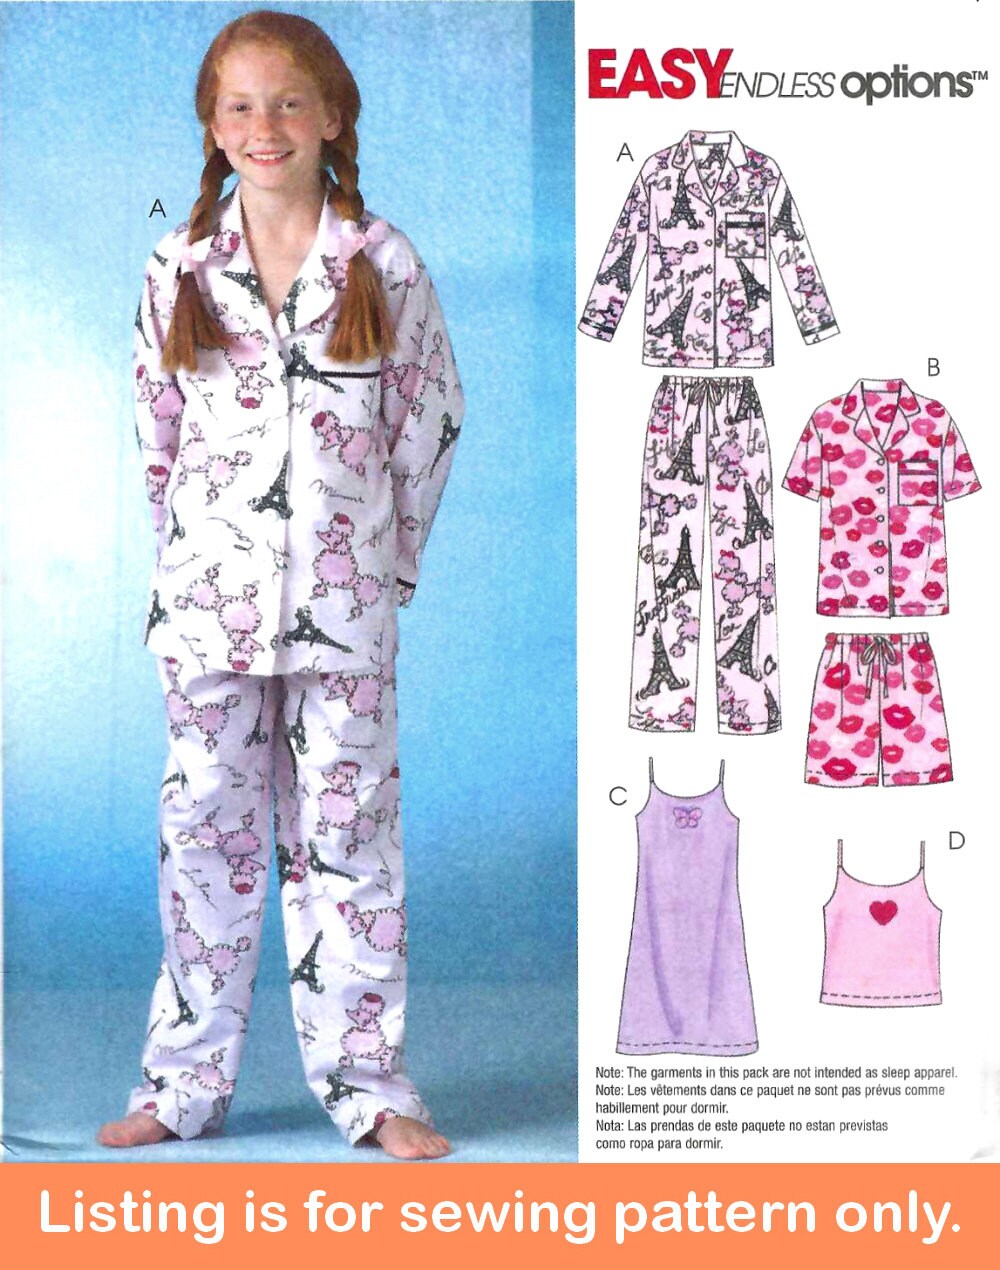 Sale PAJAMAS SEWING PATTERN Sew Girls Clothes Clothing Nightgown Bathrobe  Robe Sleepwear Nightwear Size 2 3 4 5 for Children 7679 -  Canada